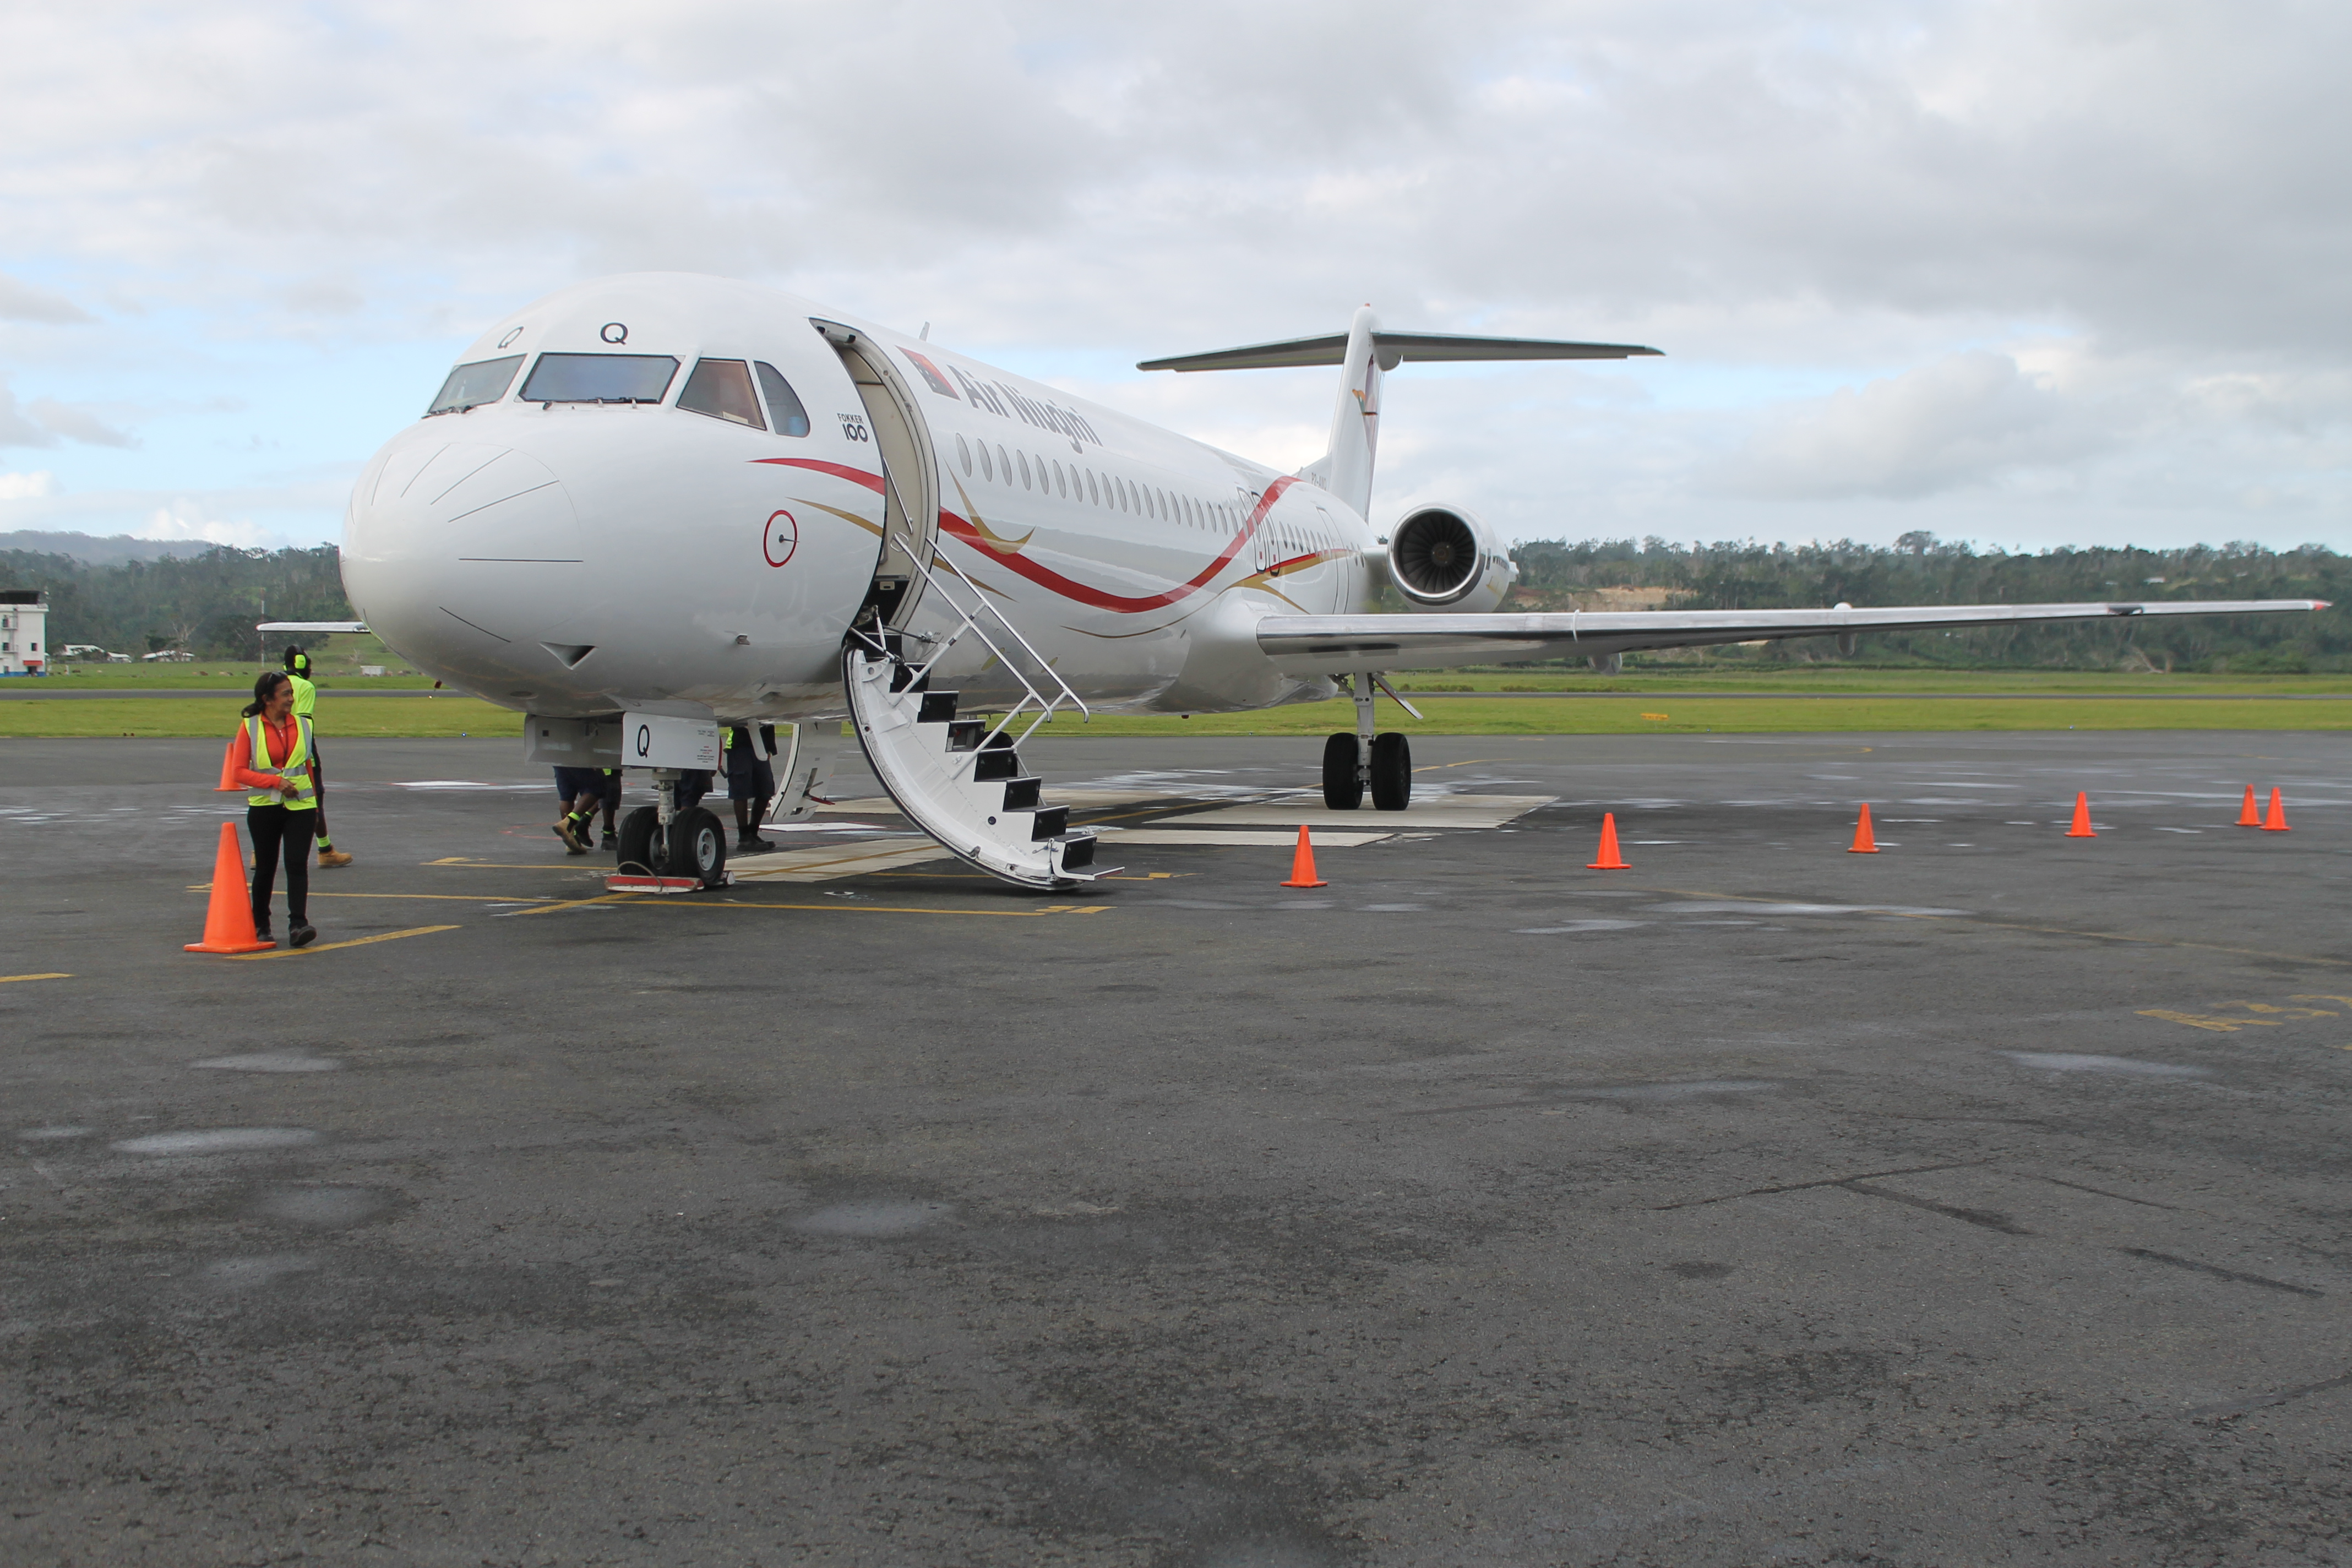 Arrival of Air Niugini F100 at Port Vila